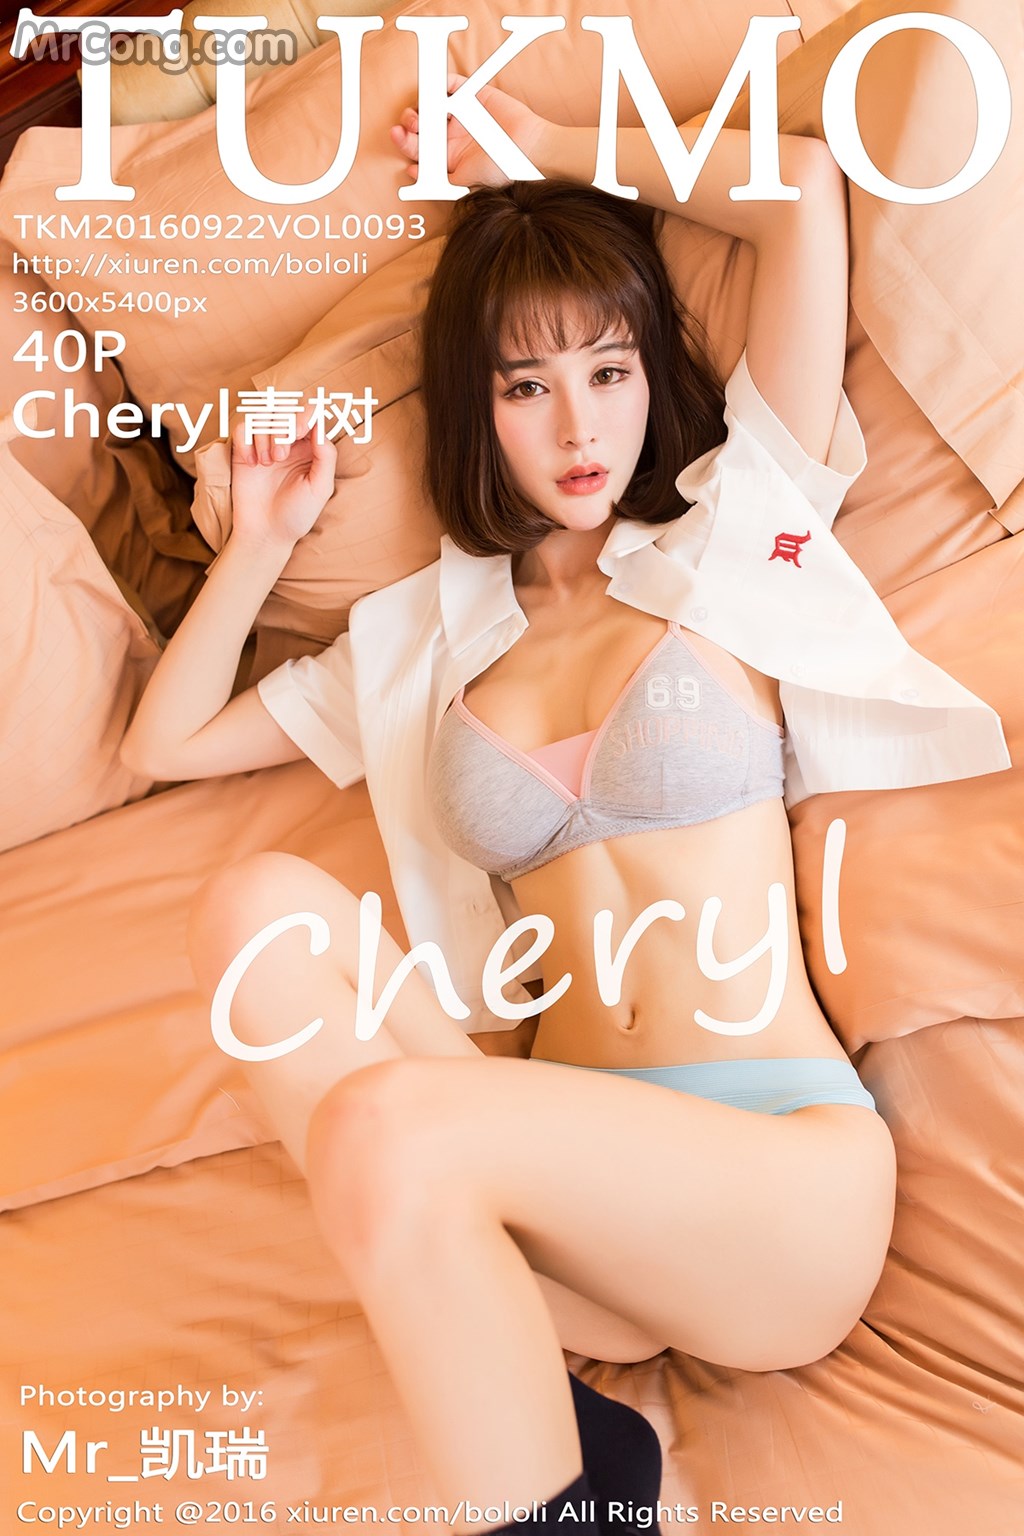 Tukmo Vol.093: Model Cheryl (青树) (41 photos) photo 1-0